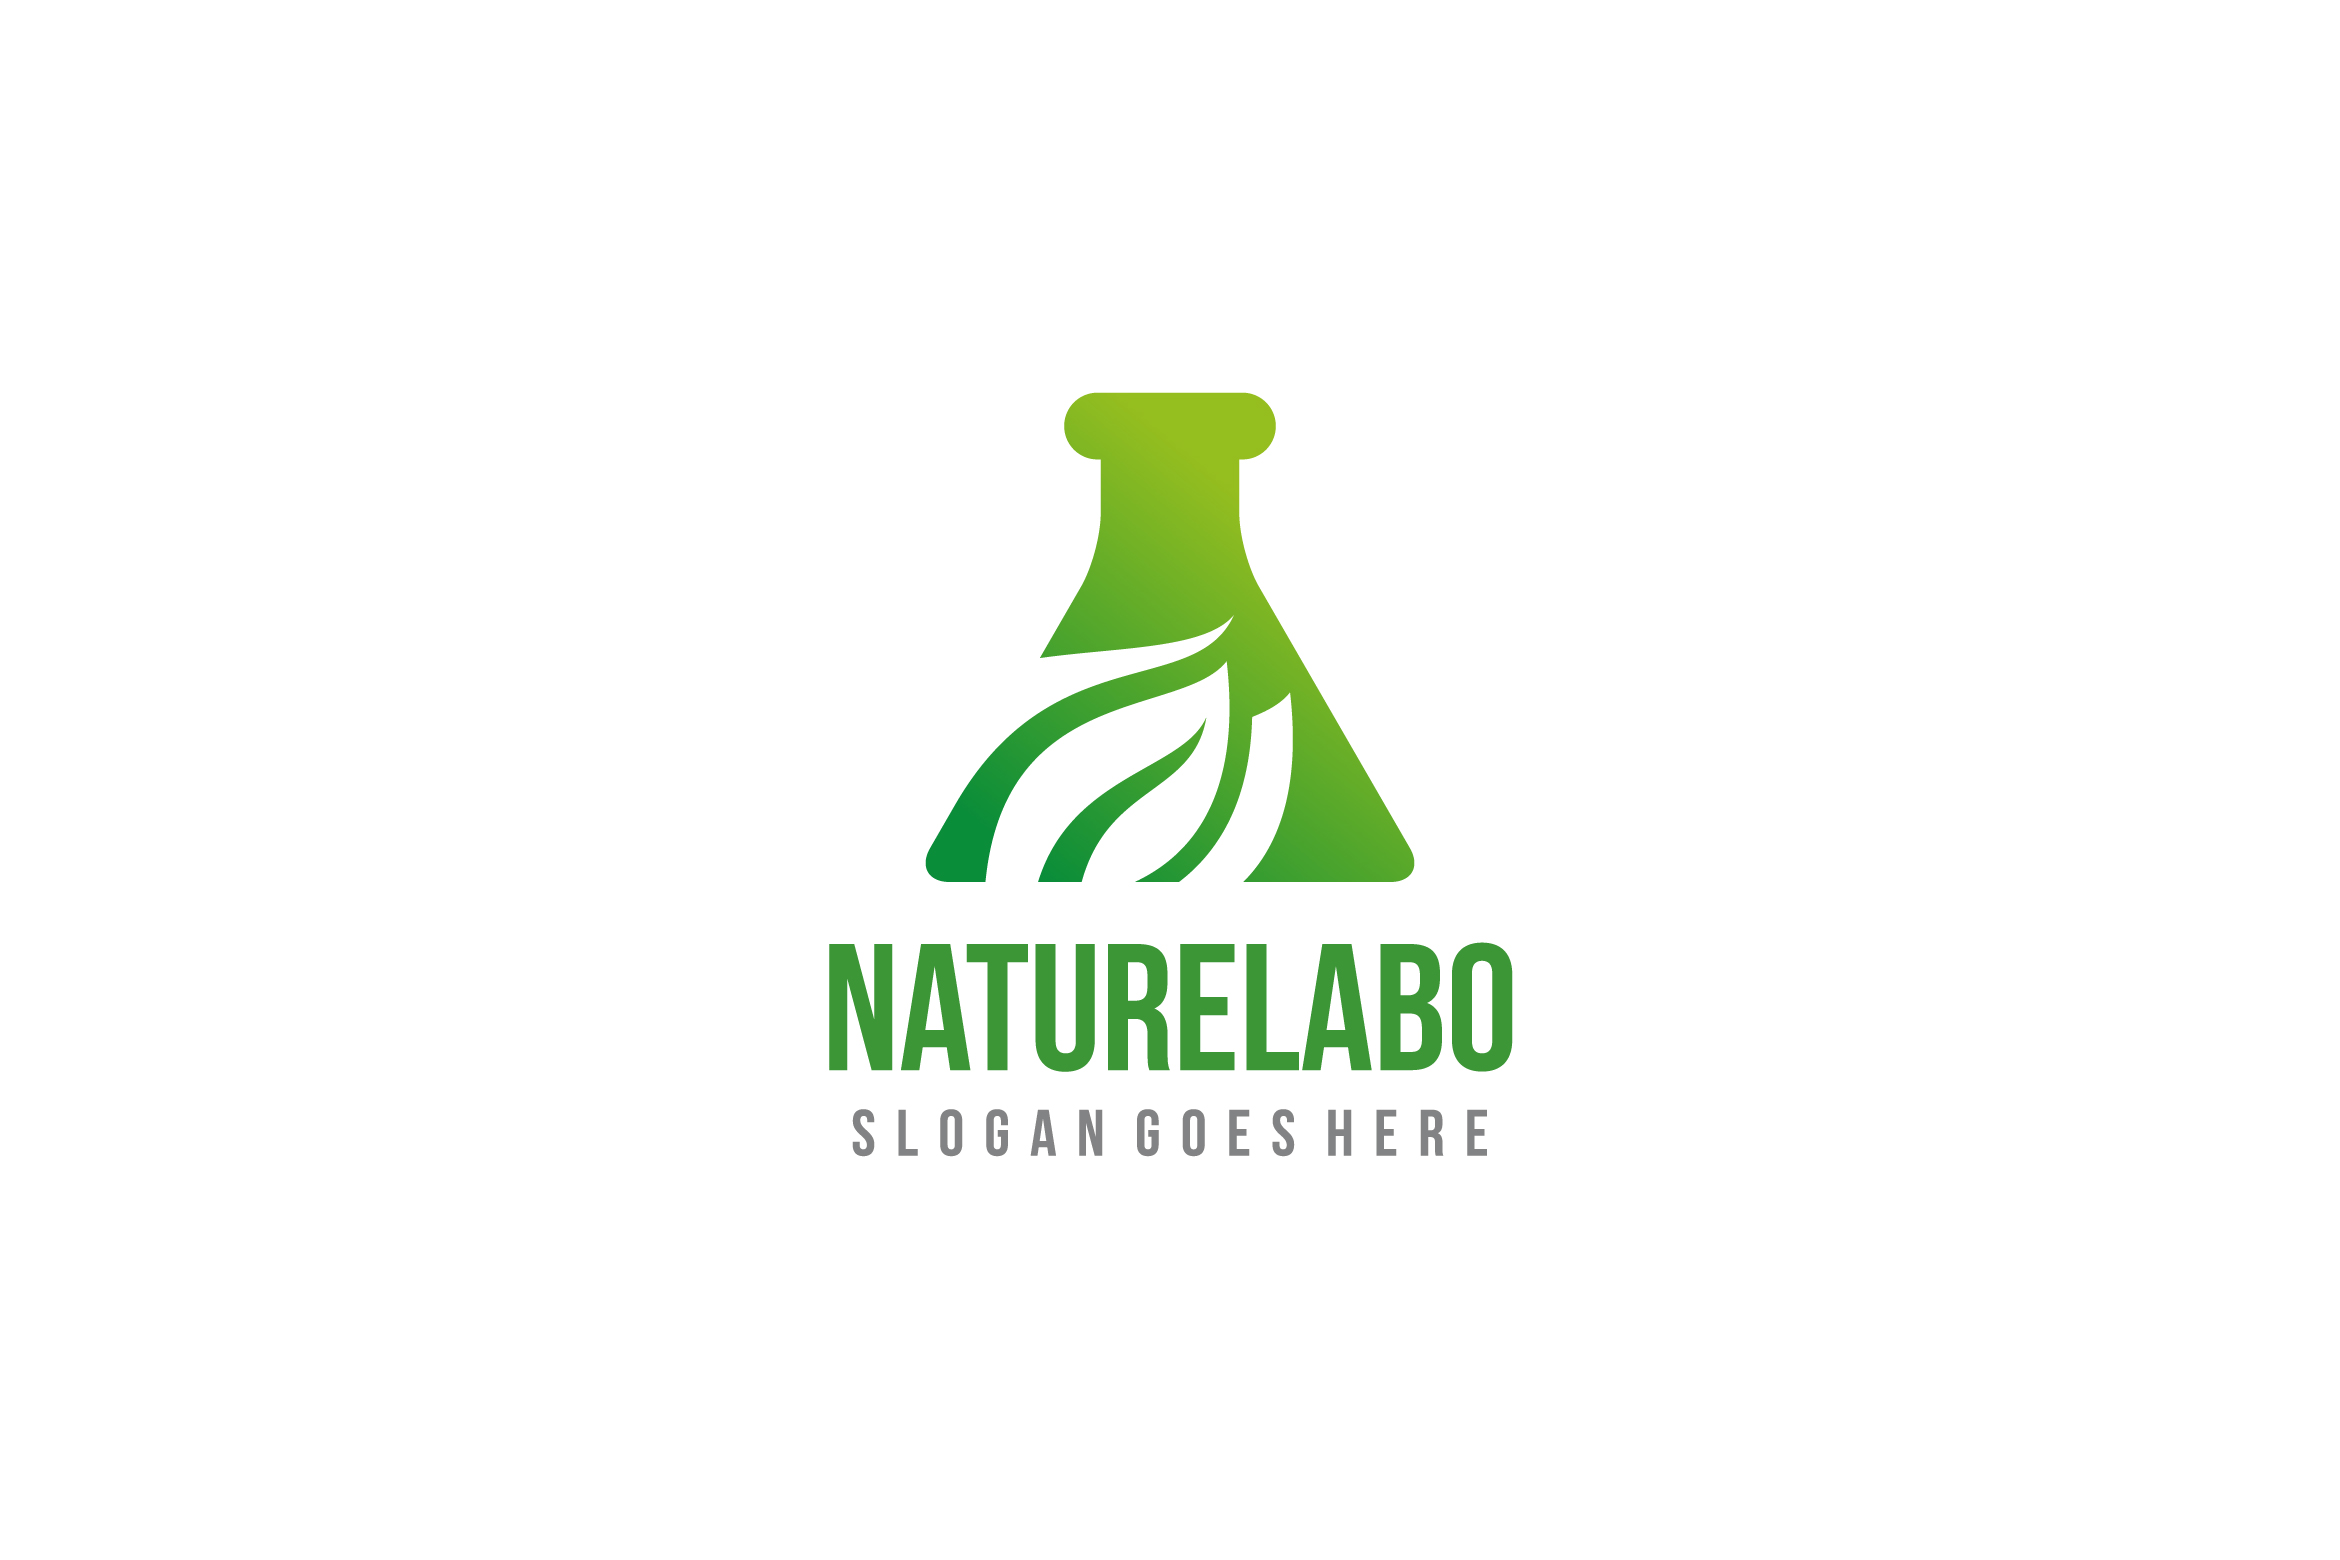 Lab Logo Free Vector Art - (192 Free Downloads)